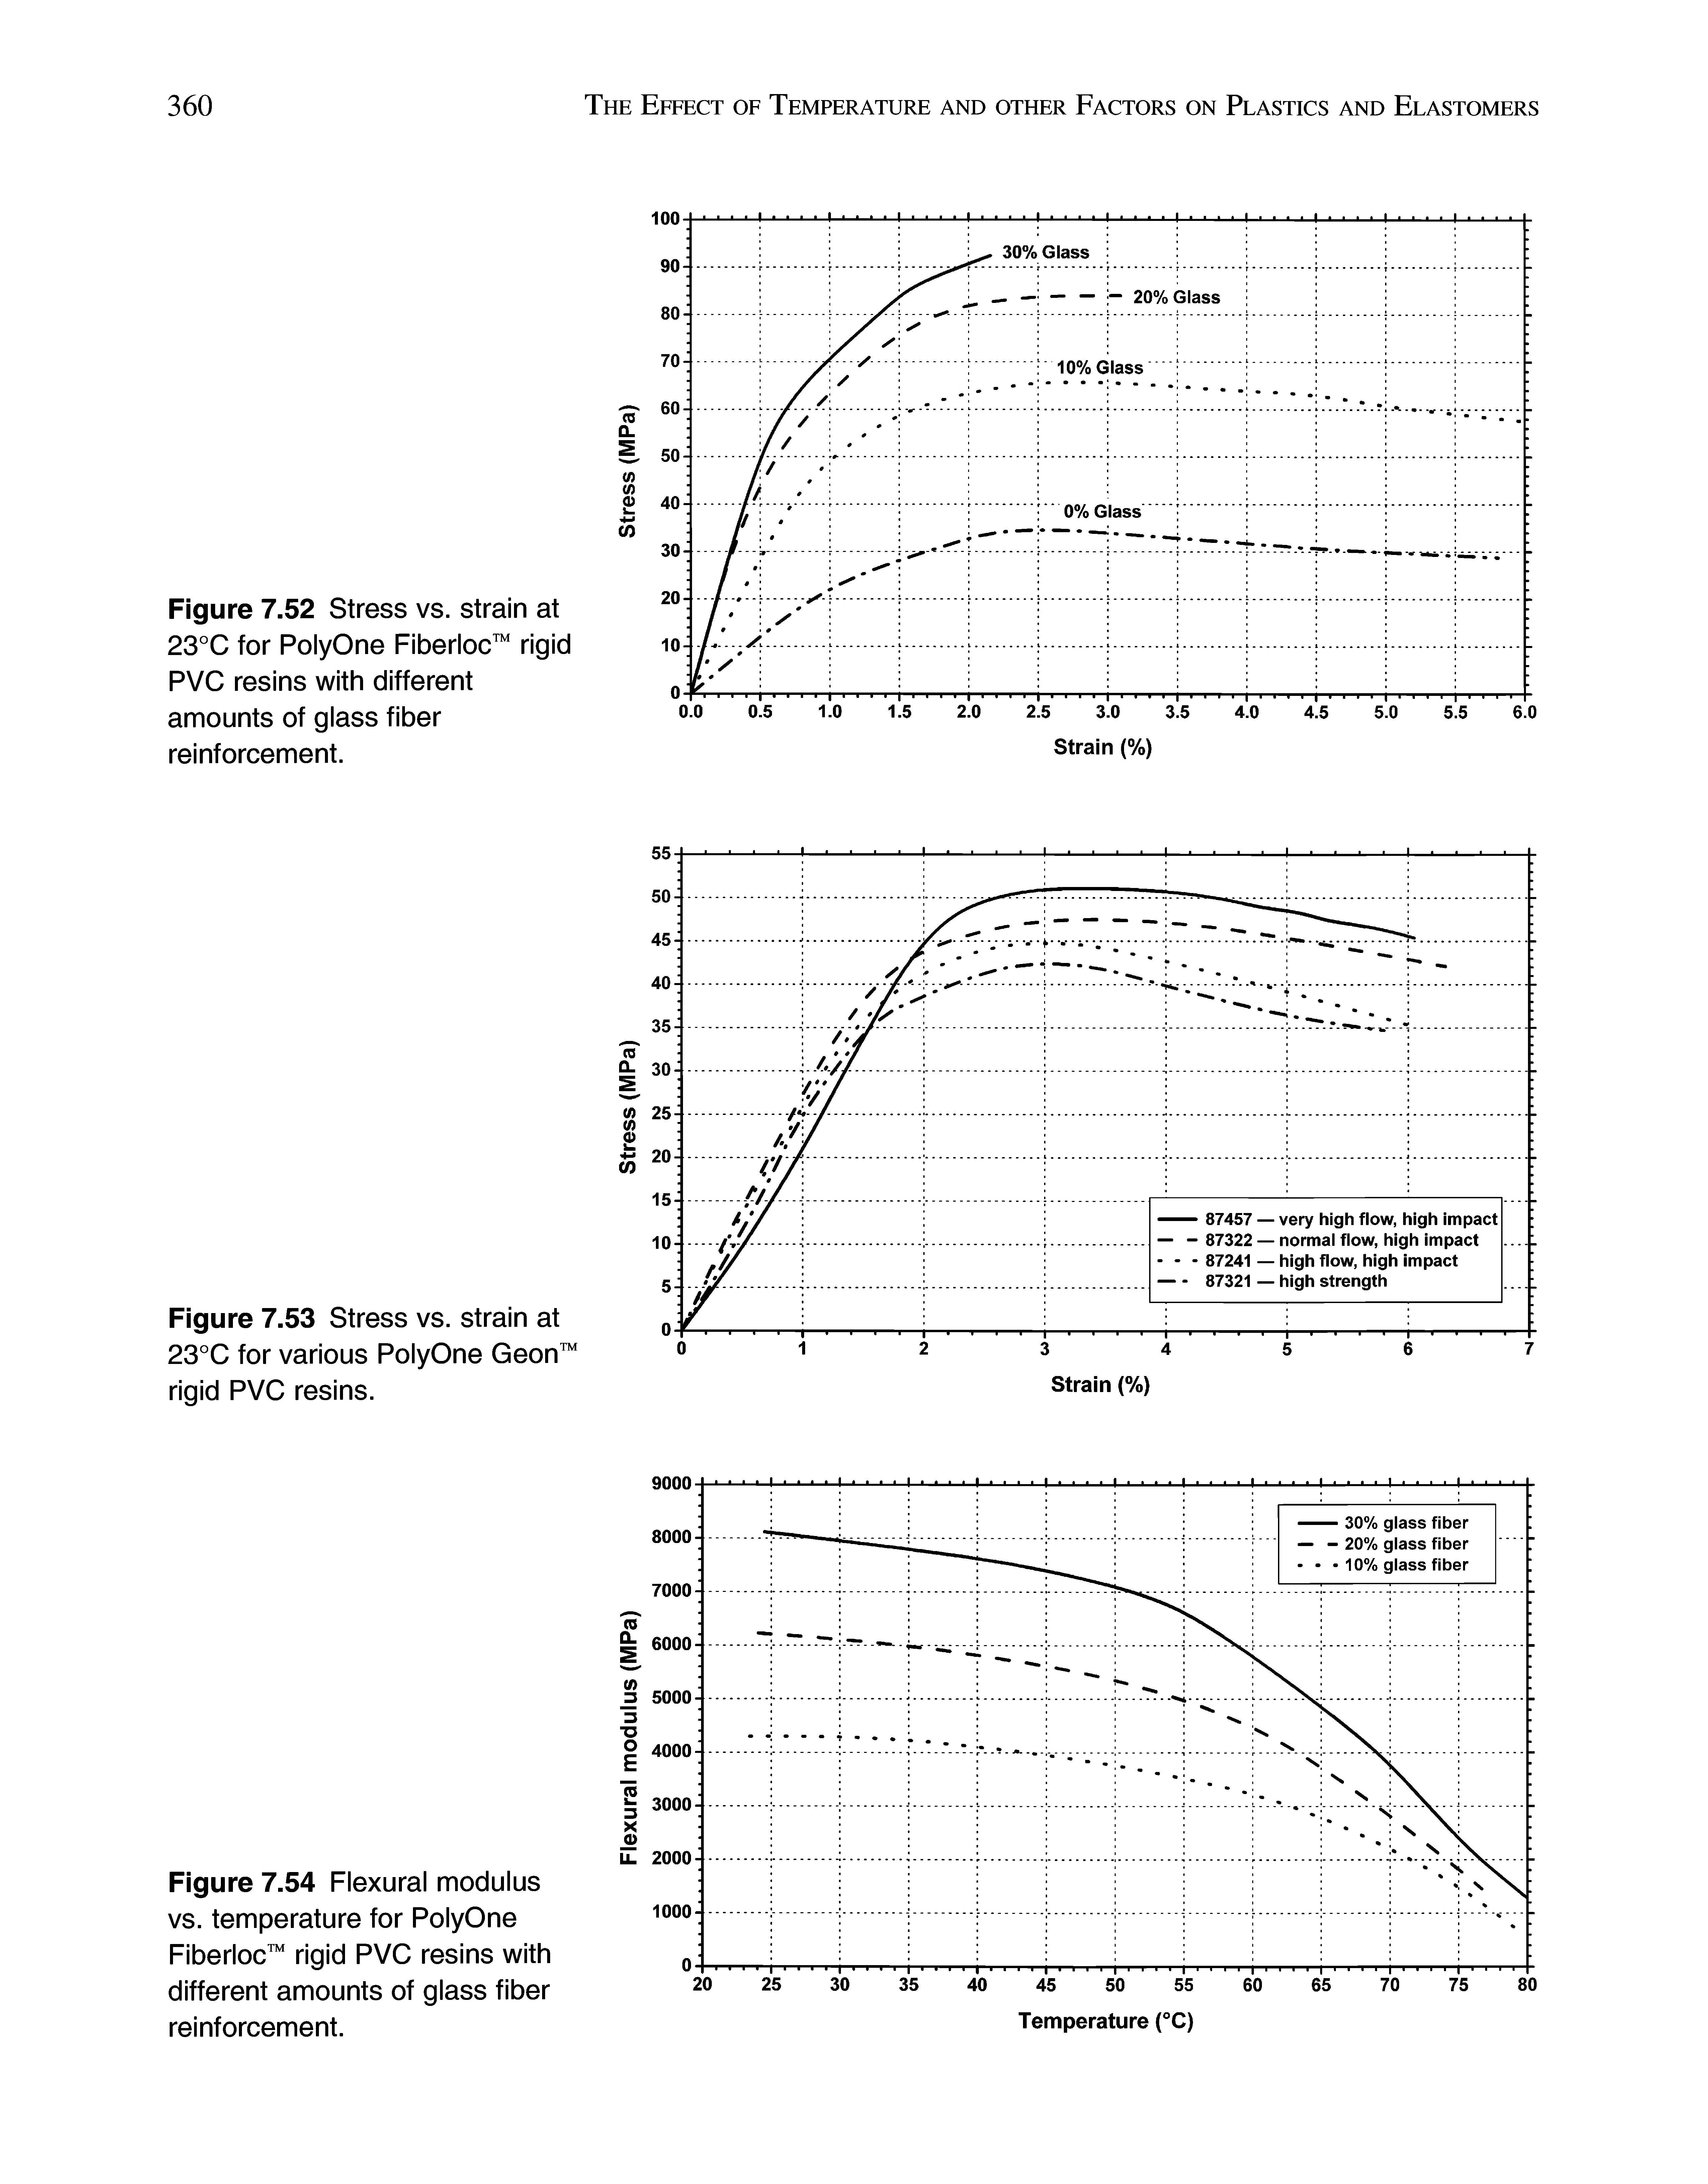 Figure 7.54 Flexural modulus vs. temperature for PolyOne Fiberloc rigid PVC resins with different amounts of glass fiber reinforcement.